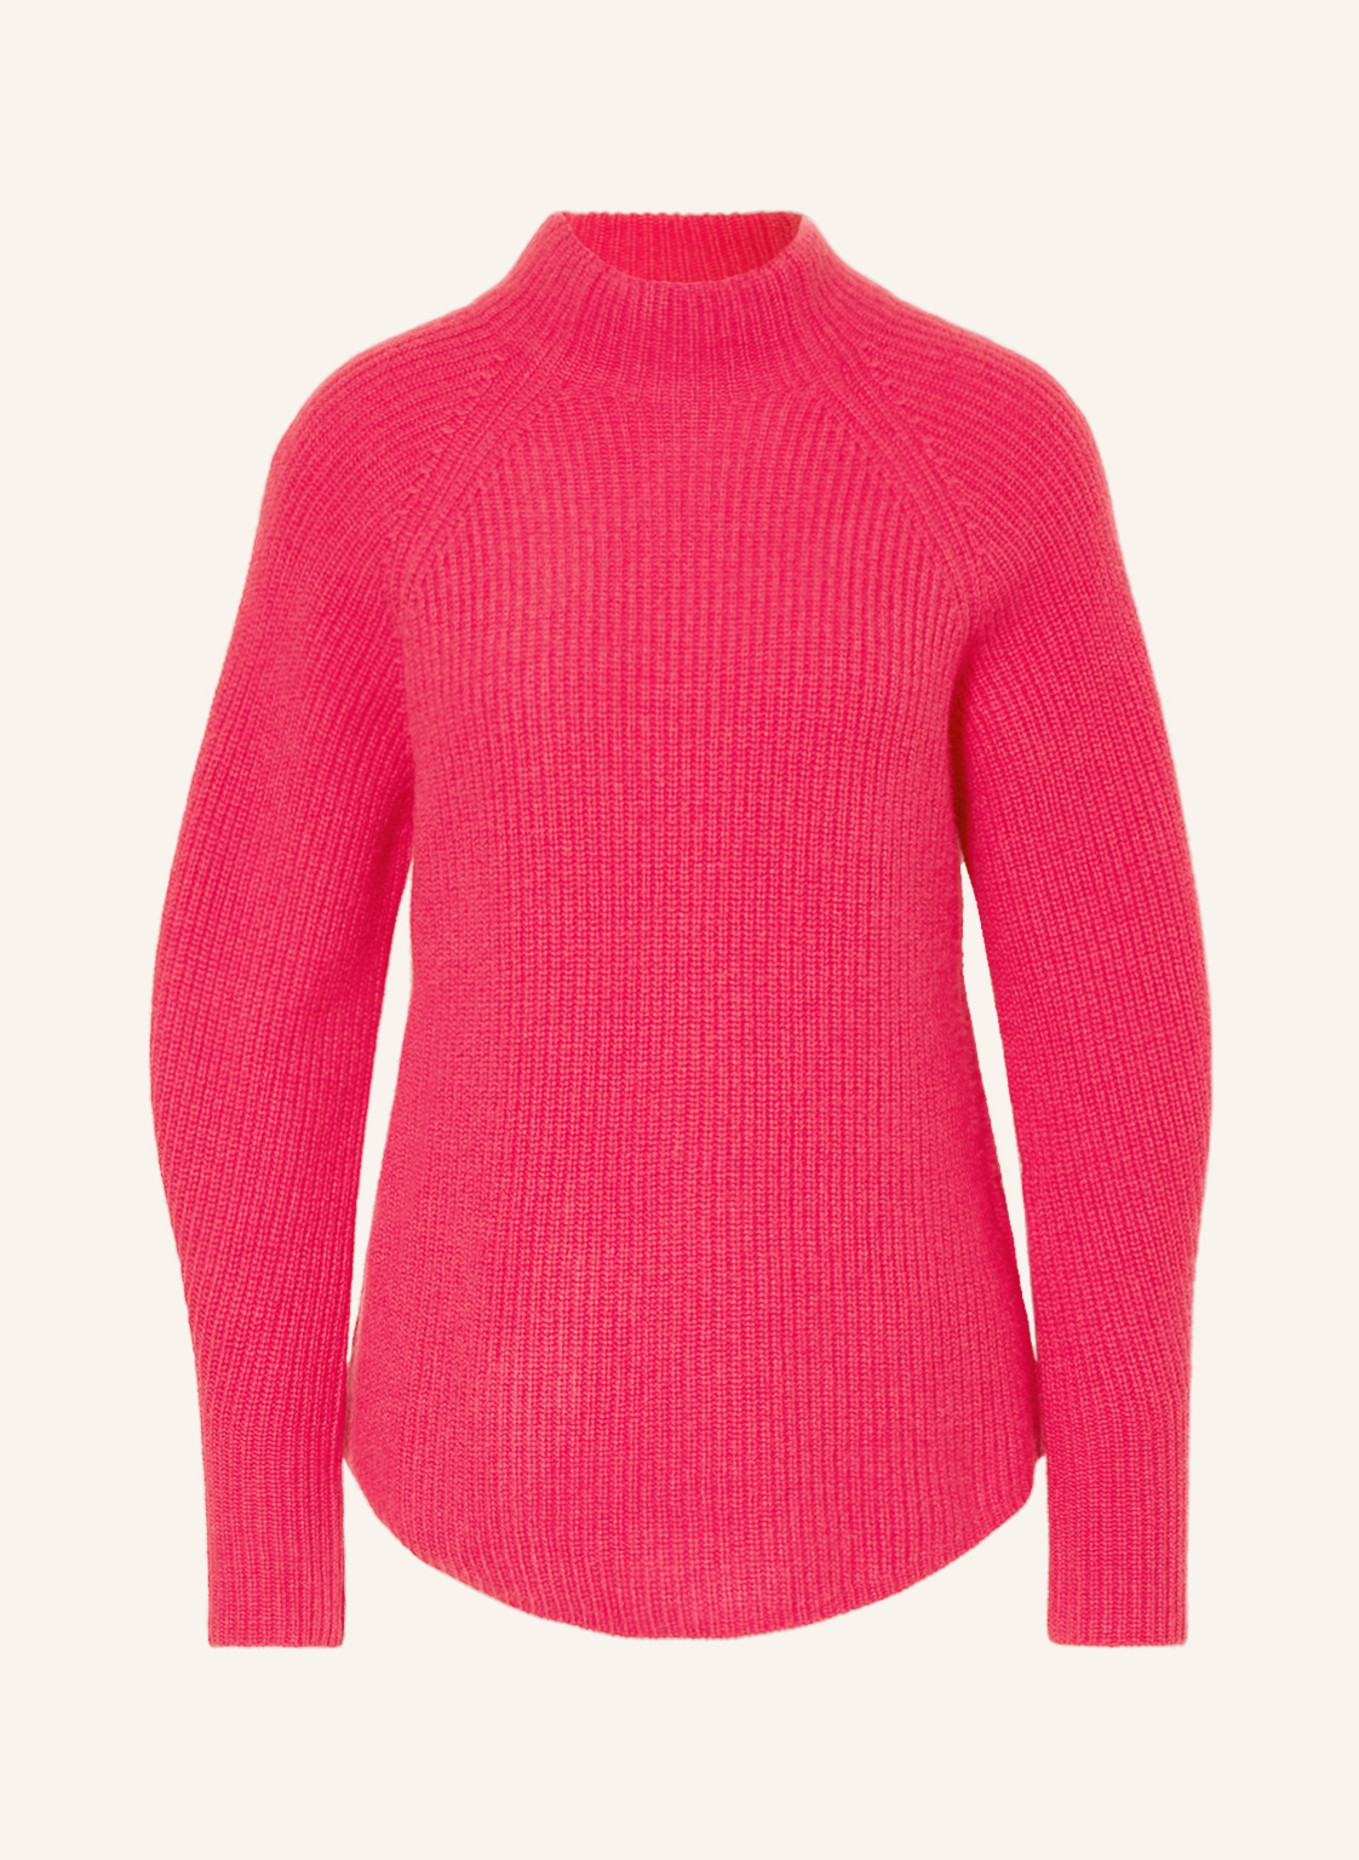 lilienfels Pullover mit Cashmere, Farbe: PINK (Bild 1)